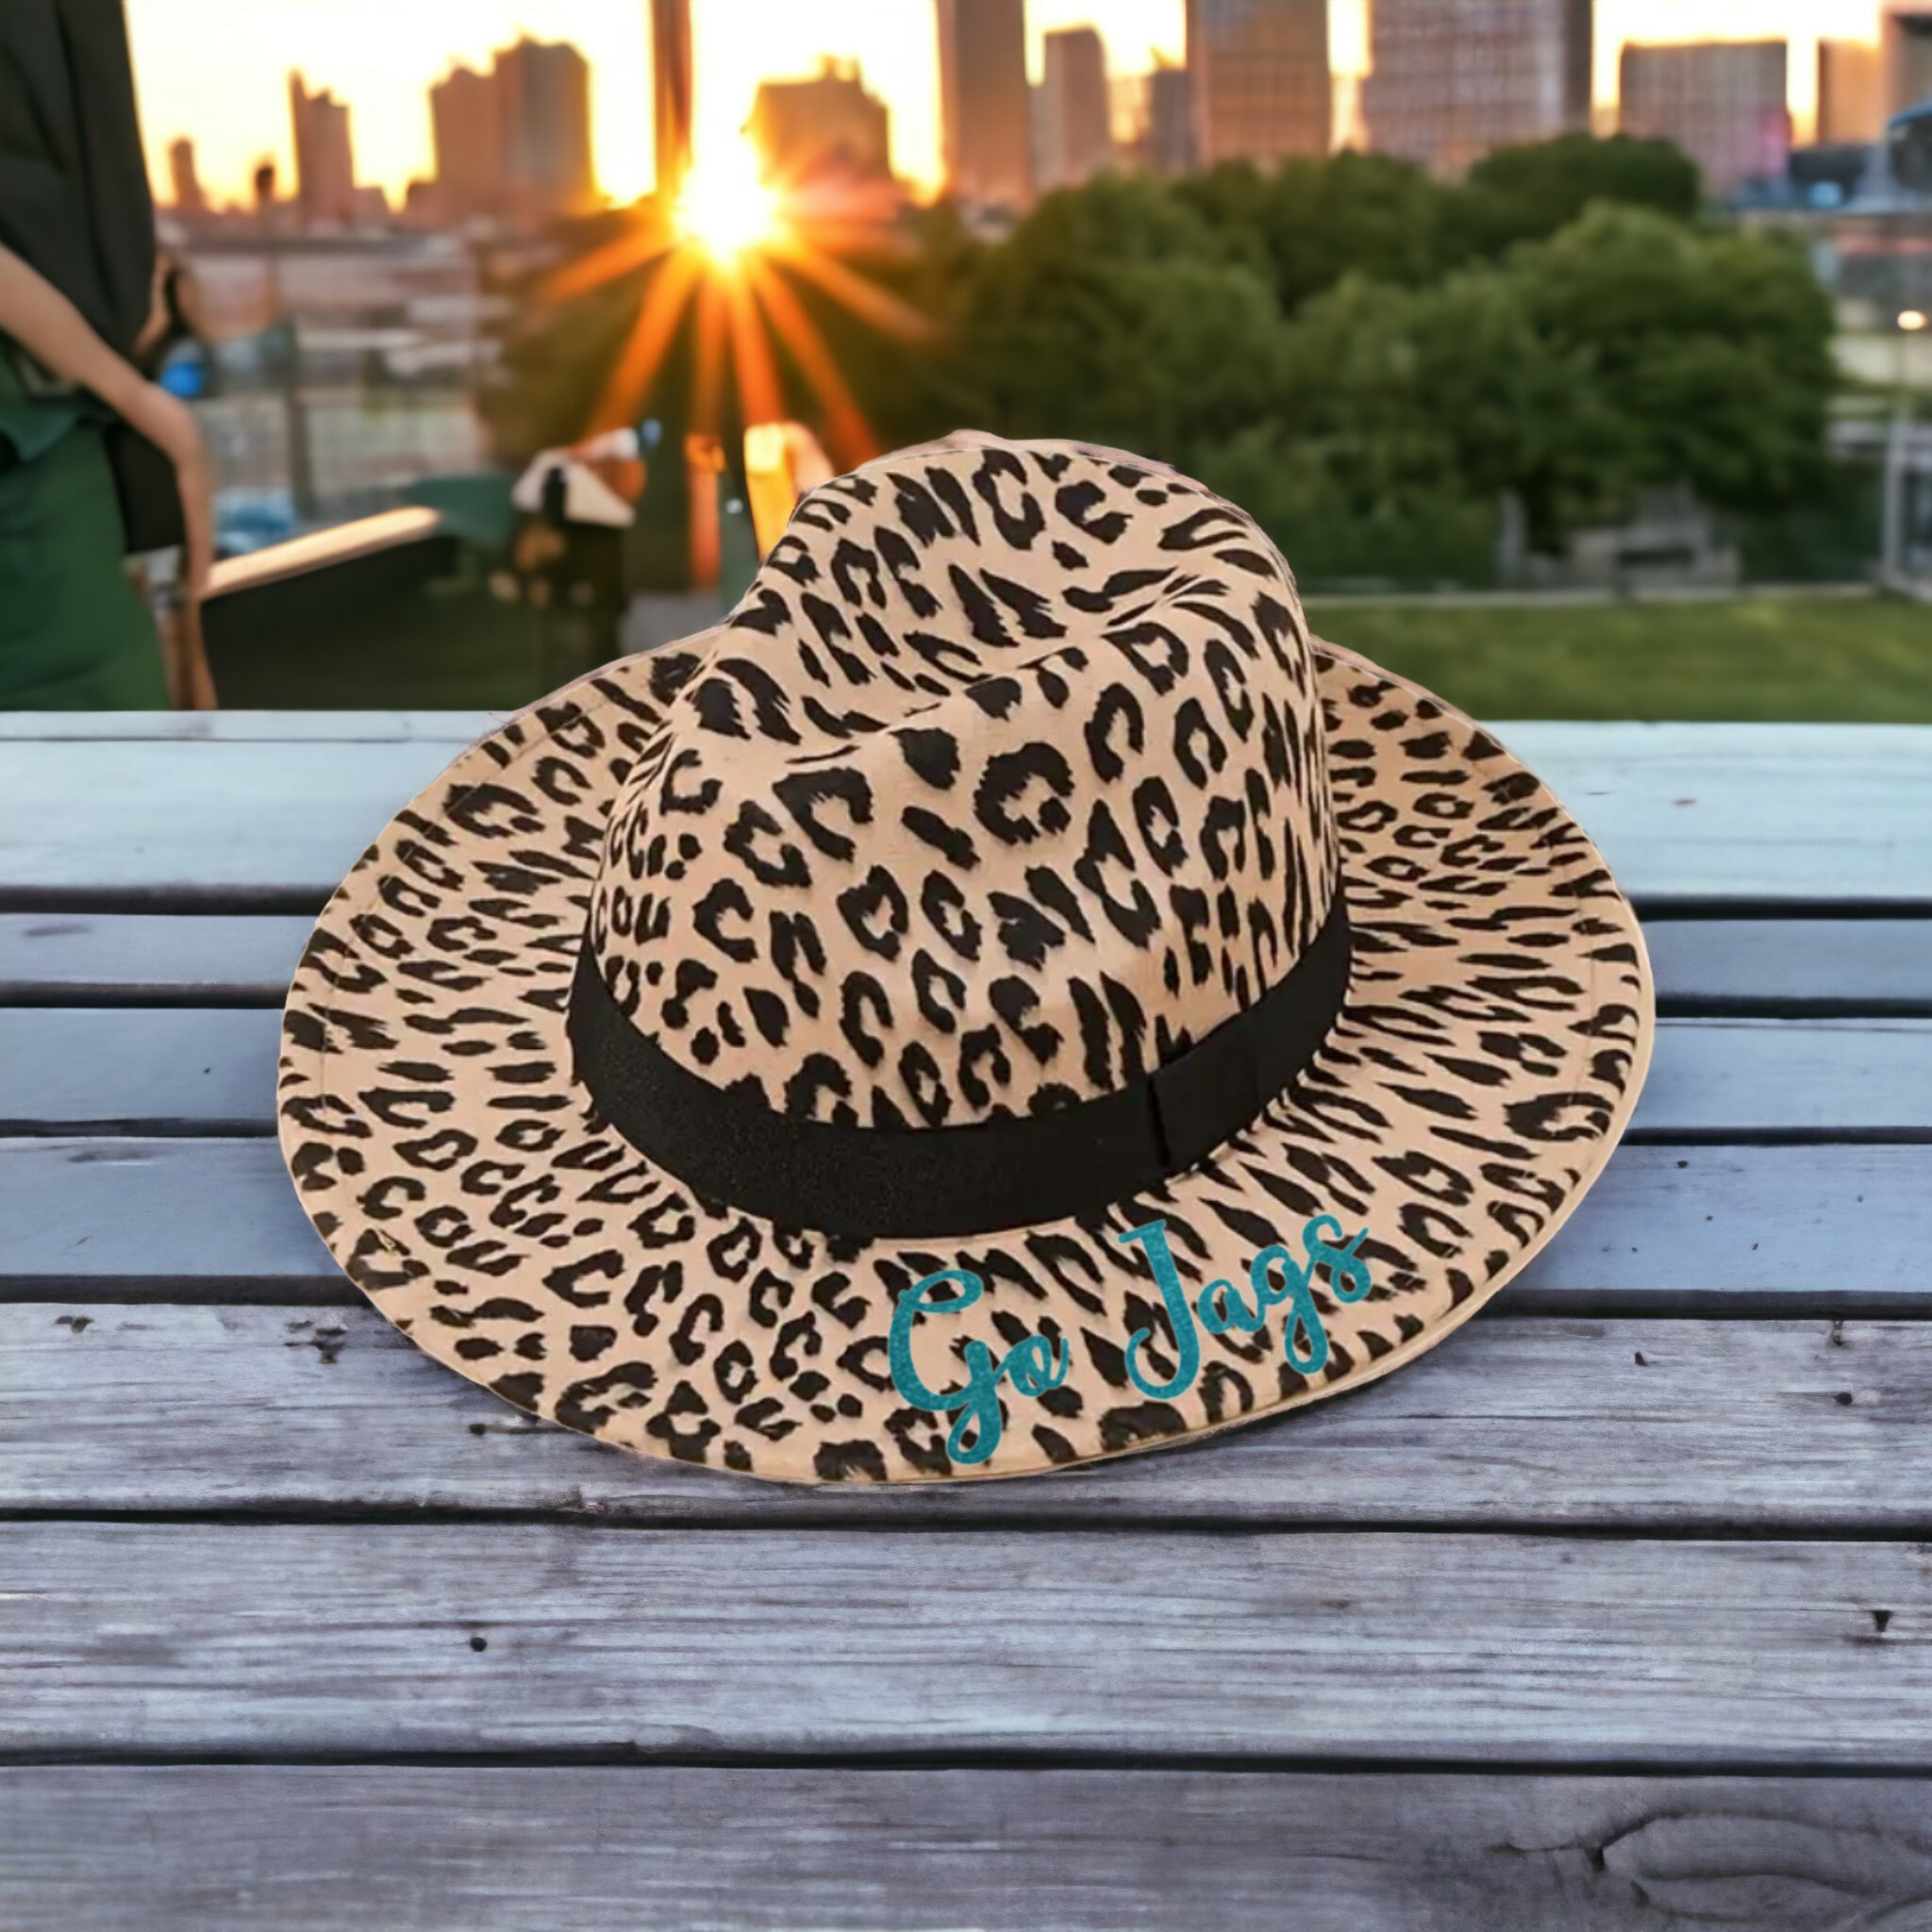 Leopard Print Women's Go Jags Fedora Hat